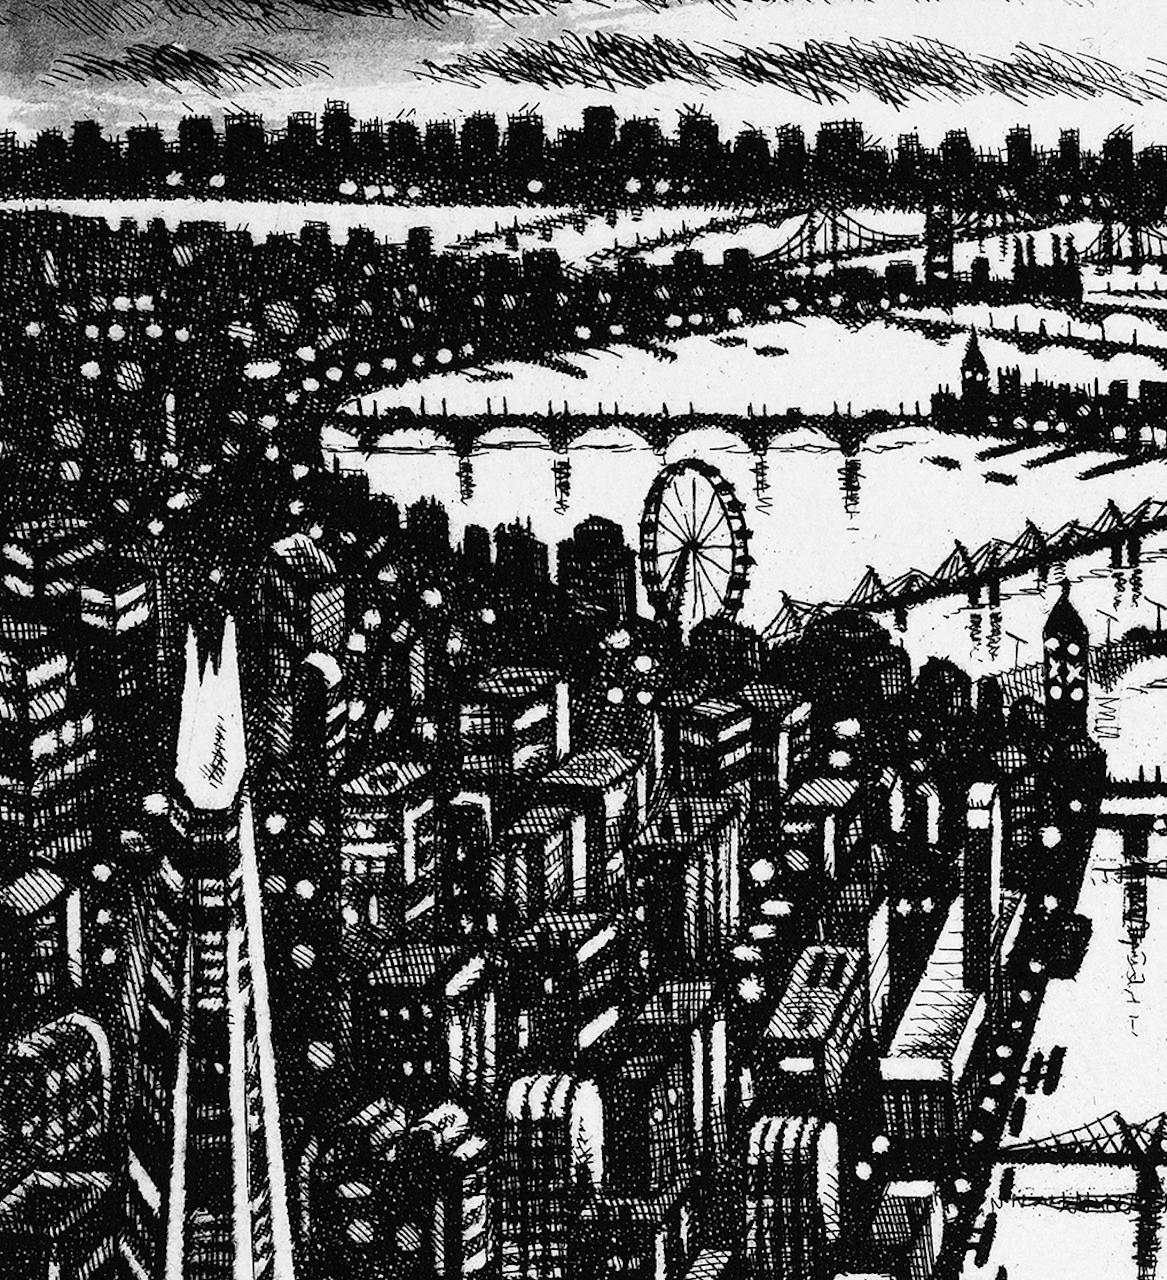 John Duffin, Thames Bridge - Looking West, London Art, Cityscape Art, River Art 3